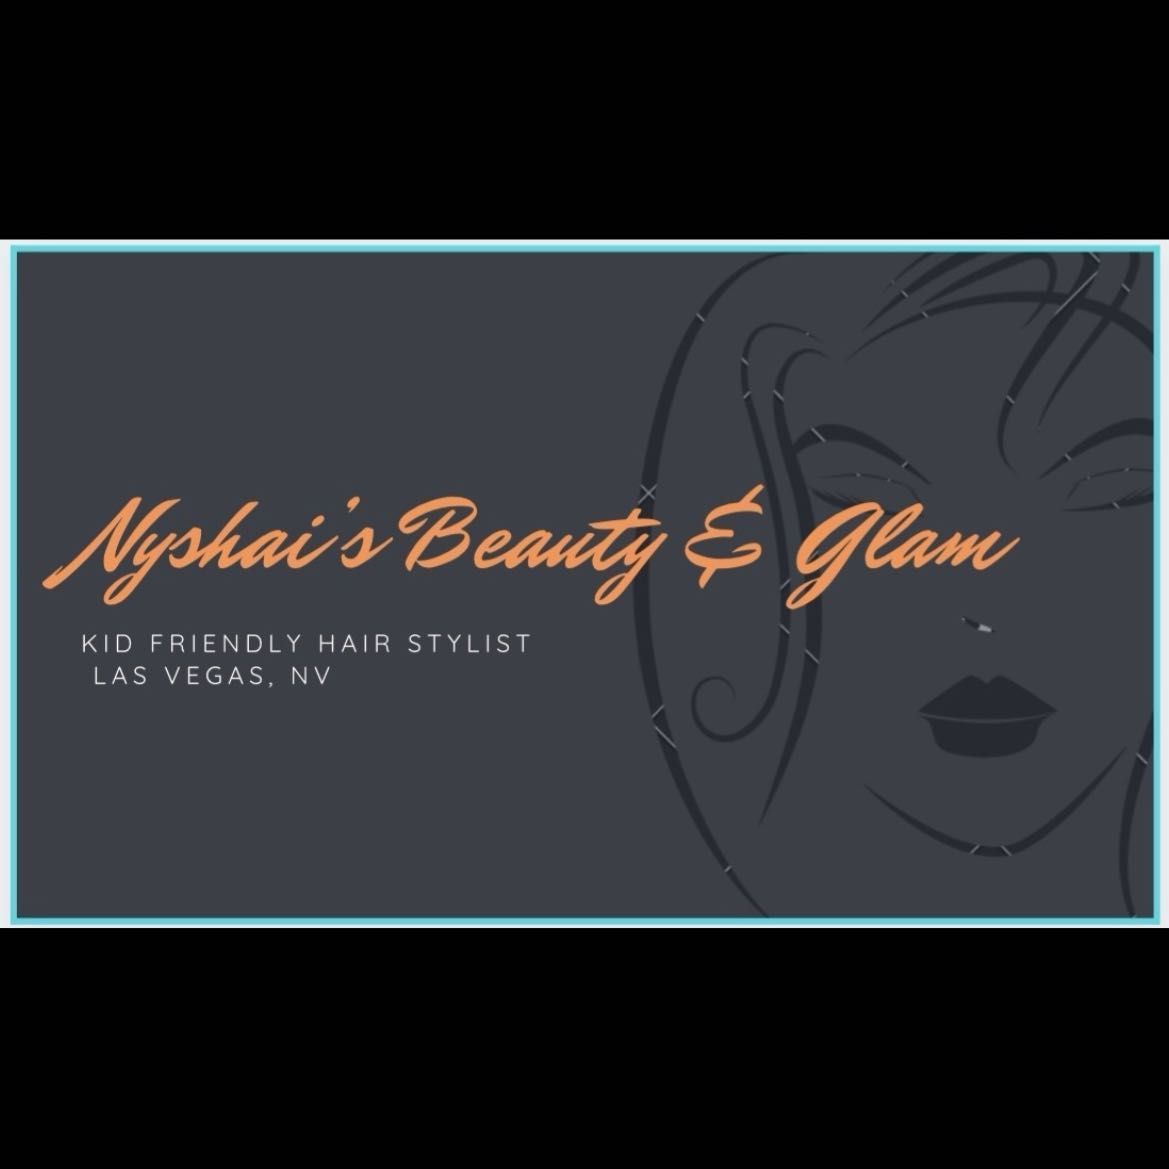 Nyshai’s Beauty & Glam, 2118 Pilar Ave, North Las Vegas, 89032